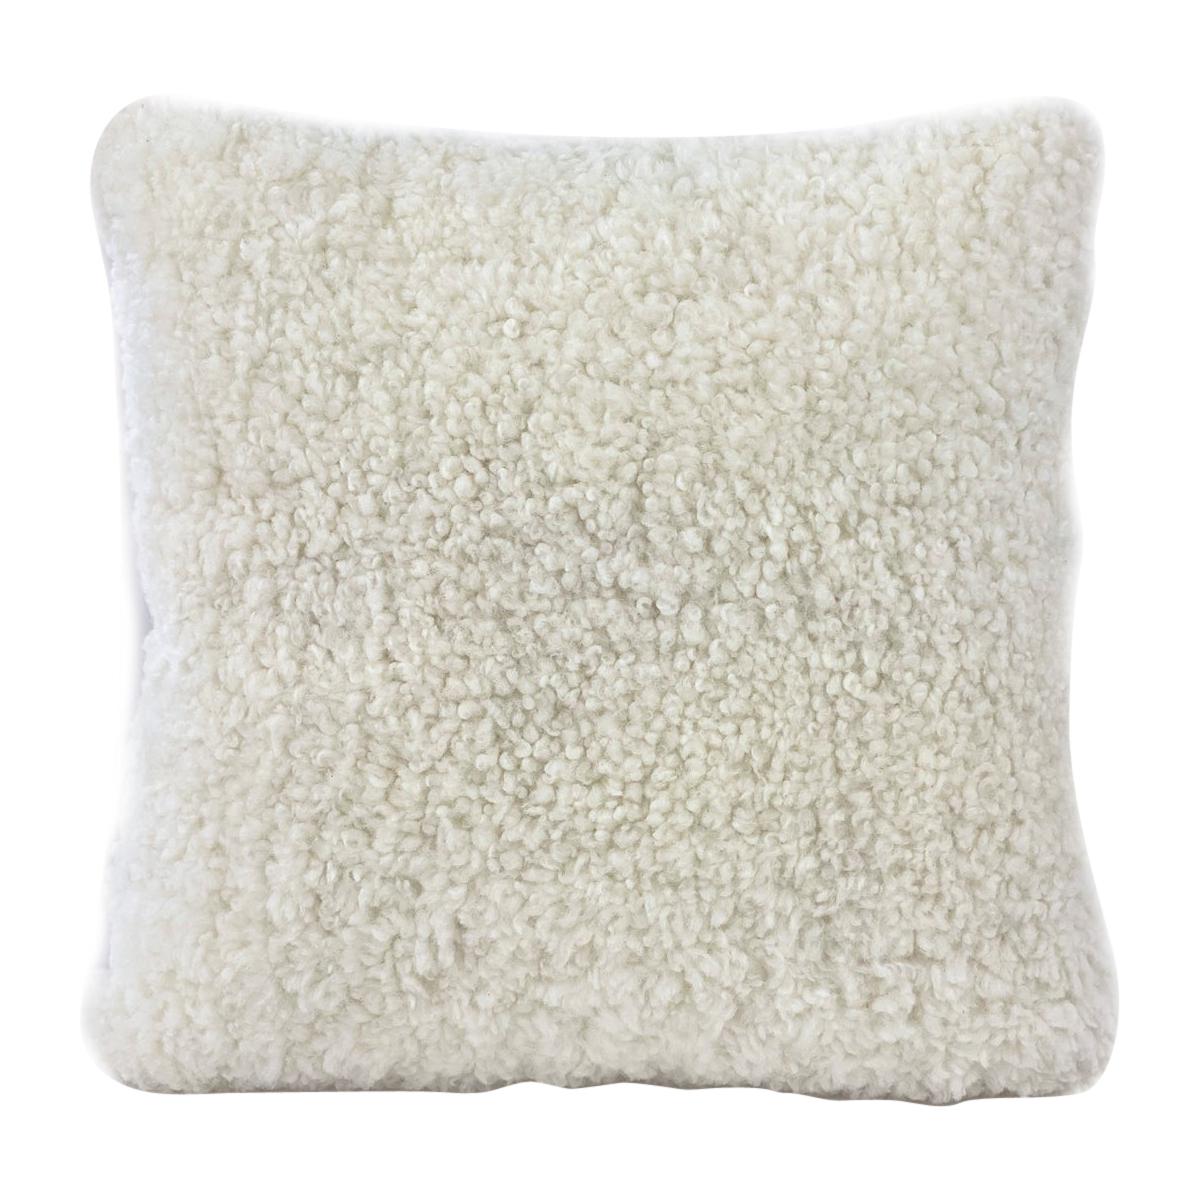 Shearling Pillow, White Sheepskin Square 18x18"  40x40cm  For Sale